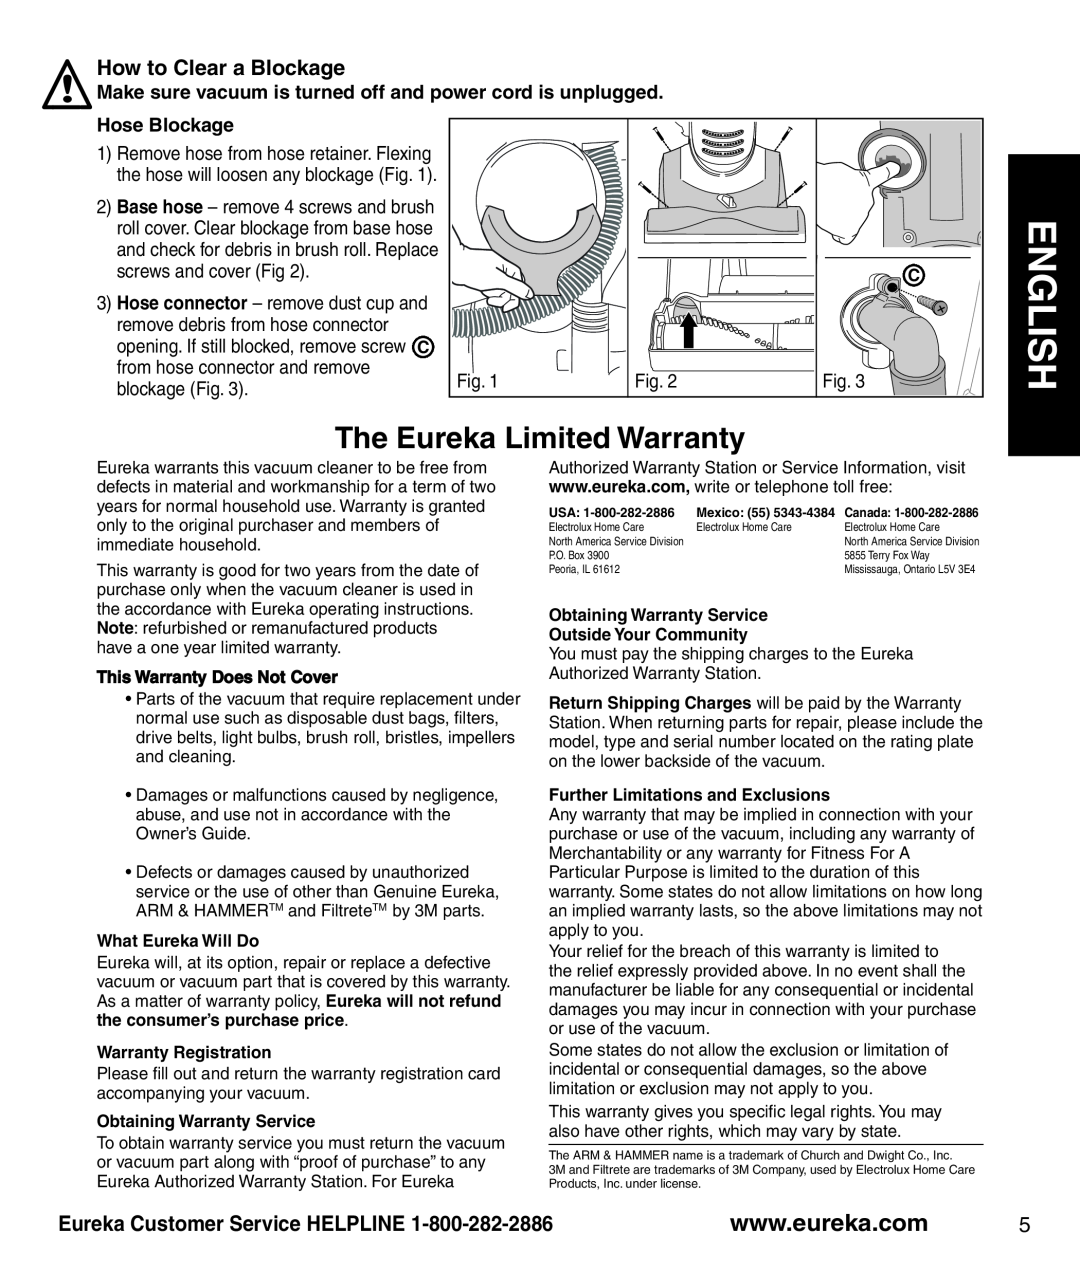 Eureka 4242A manual The Eureka Limited Warranty, How to Clear a Blockage, Hose Blockage, English 